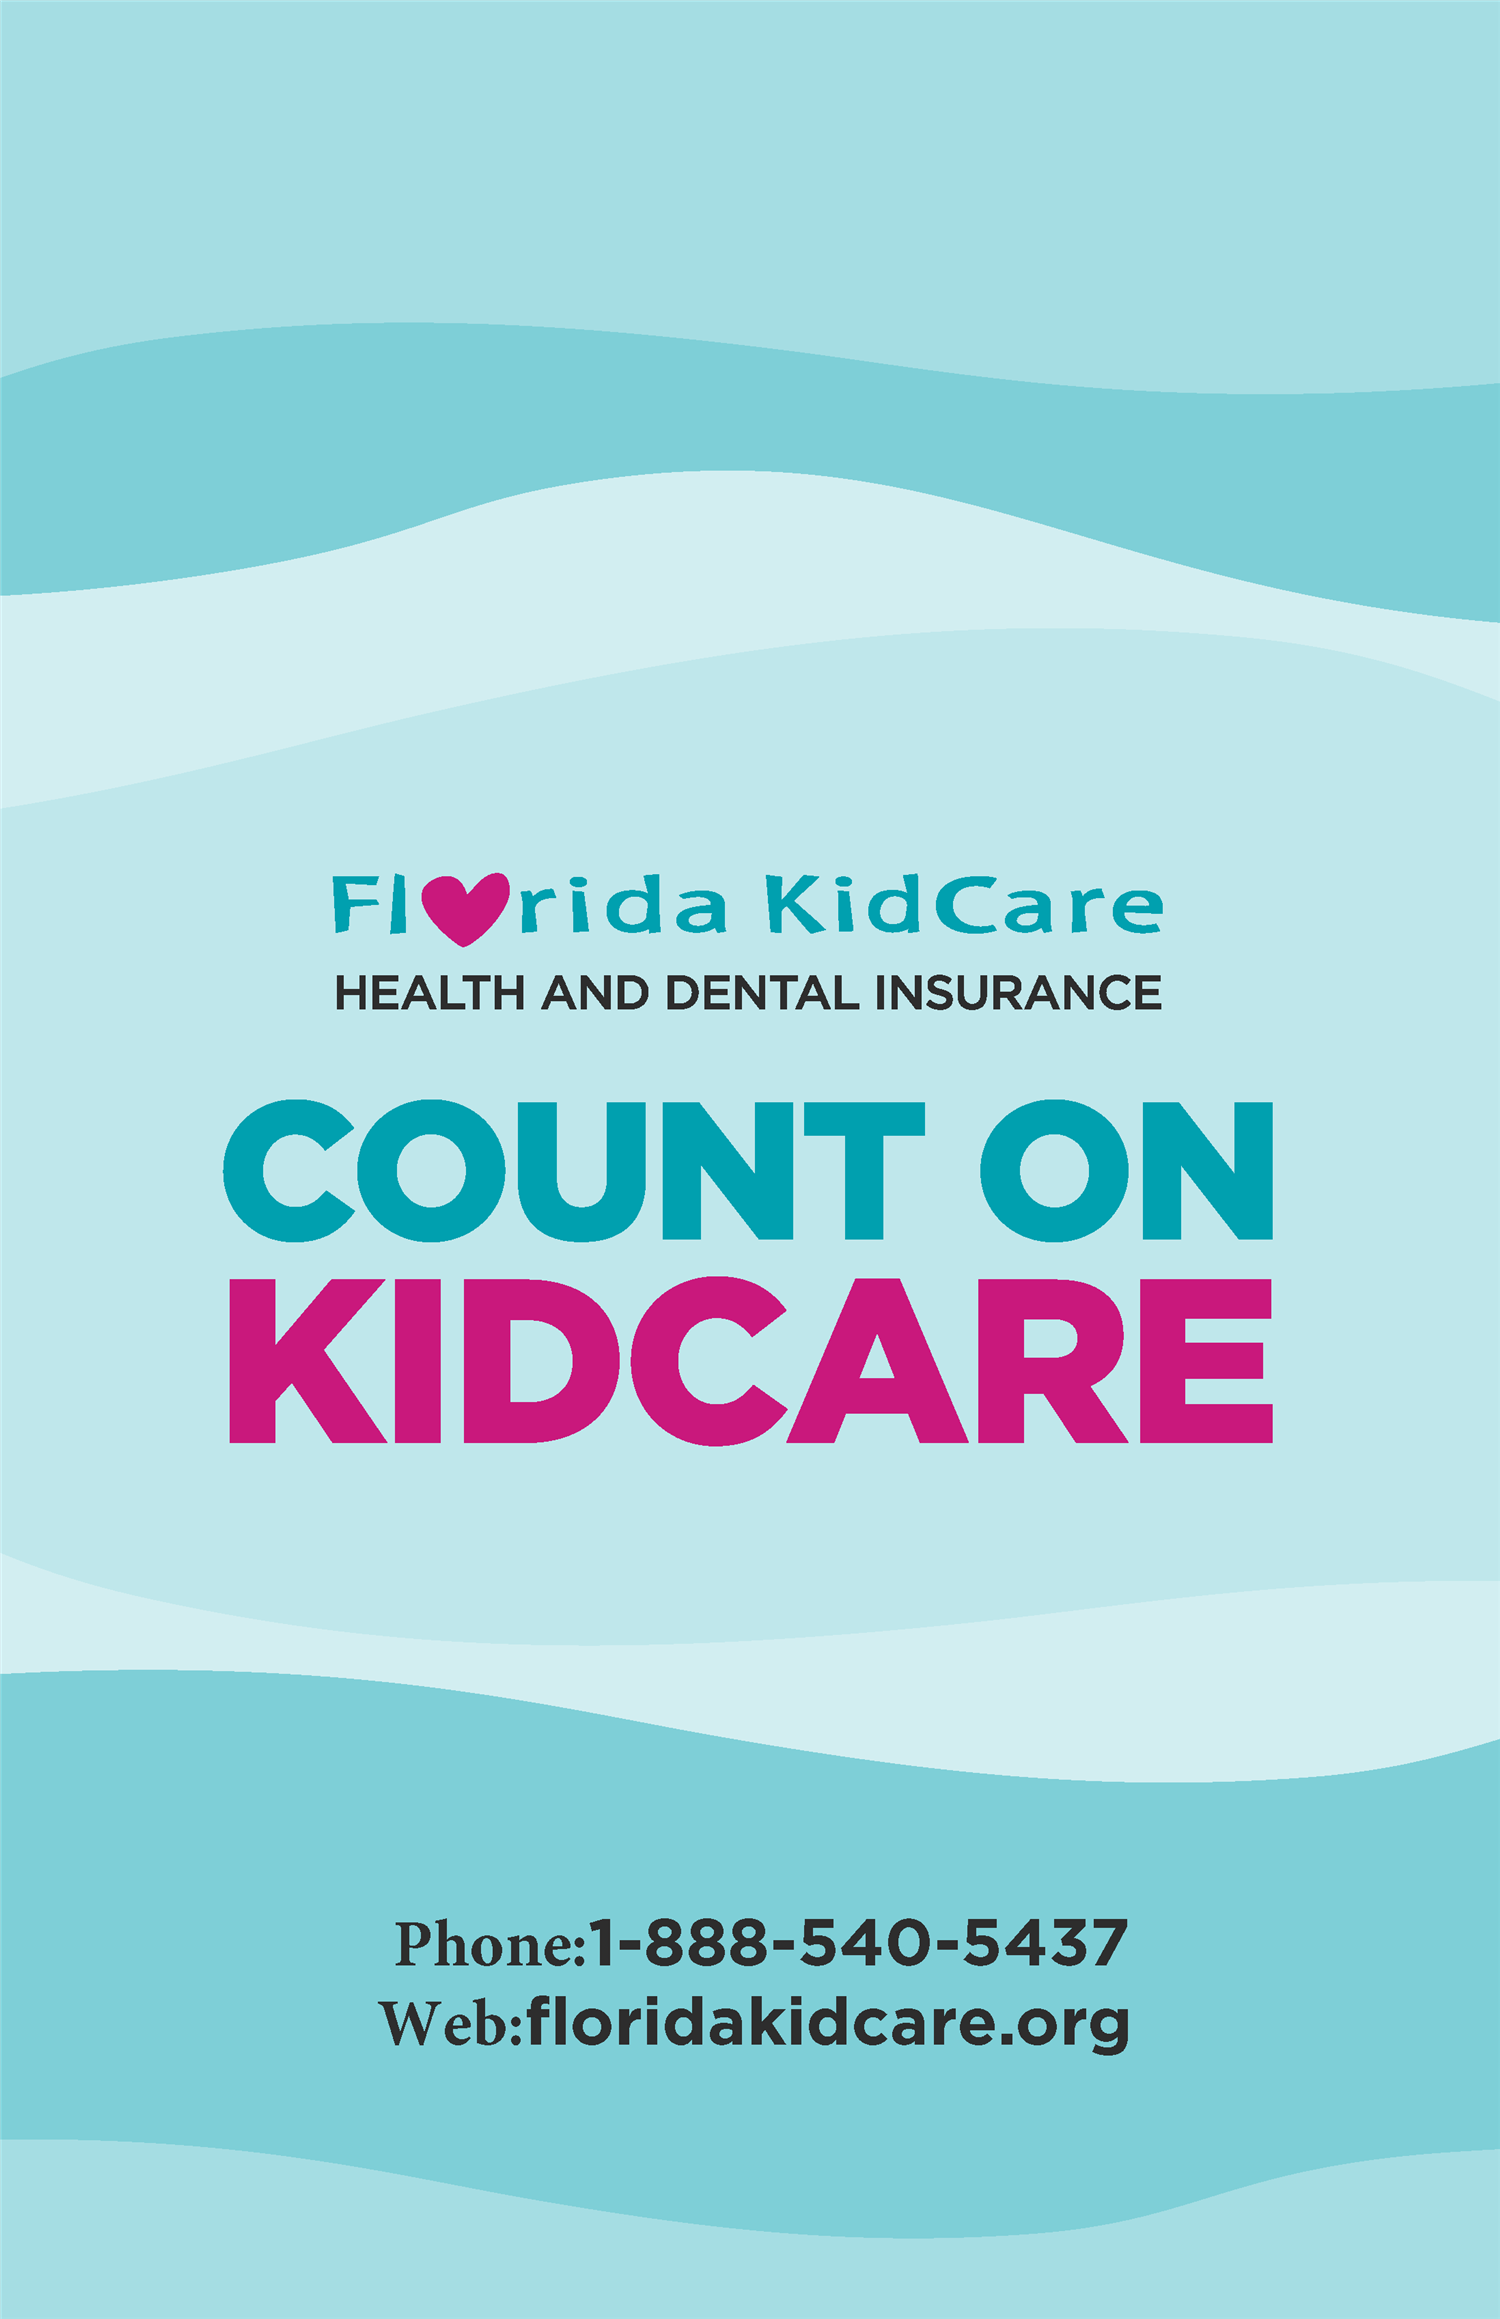 FL kidcare